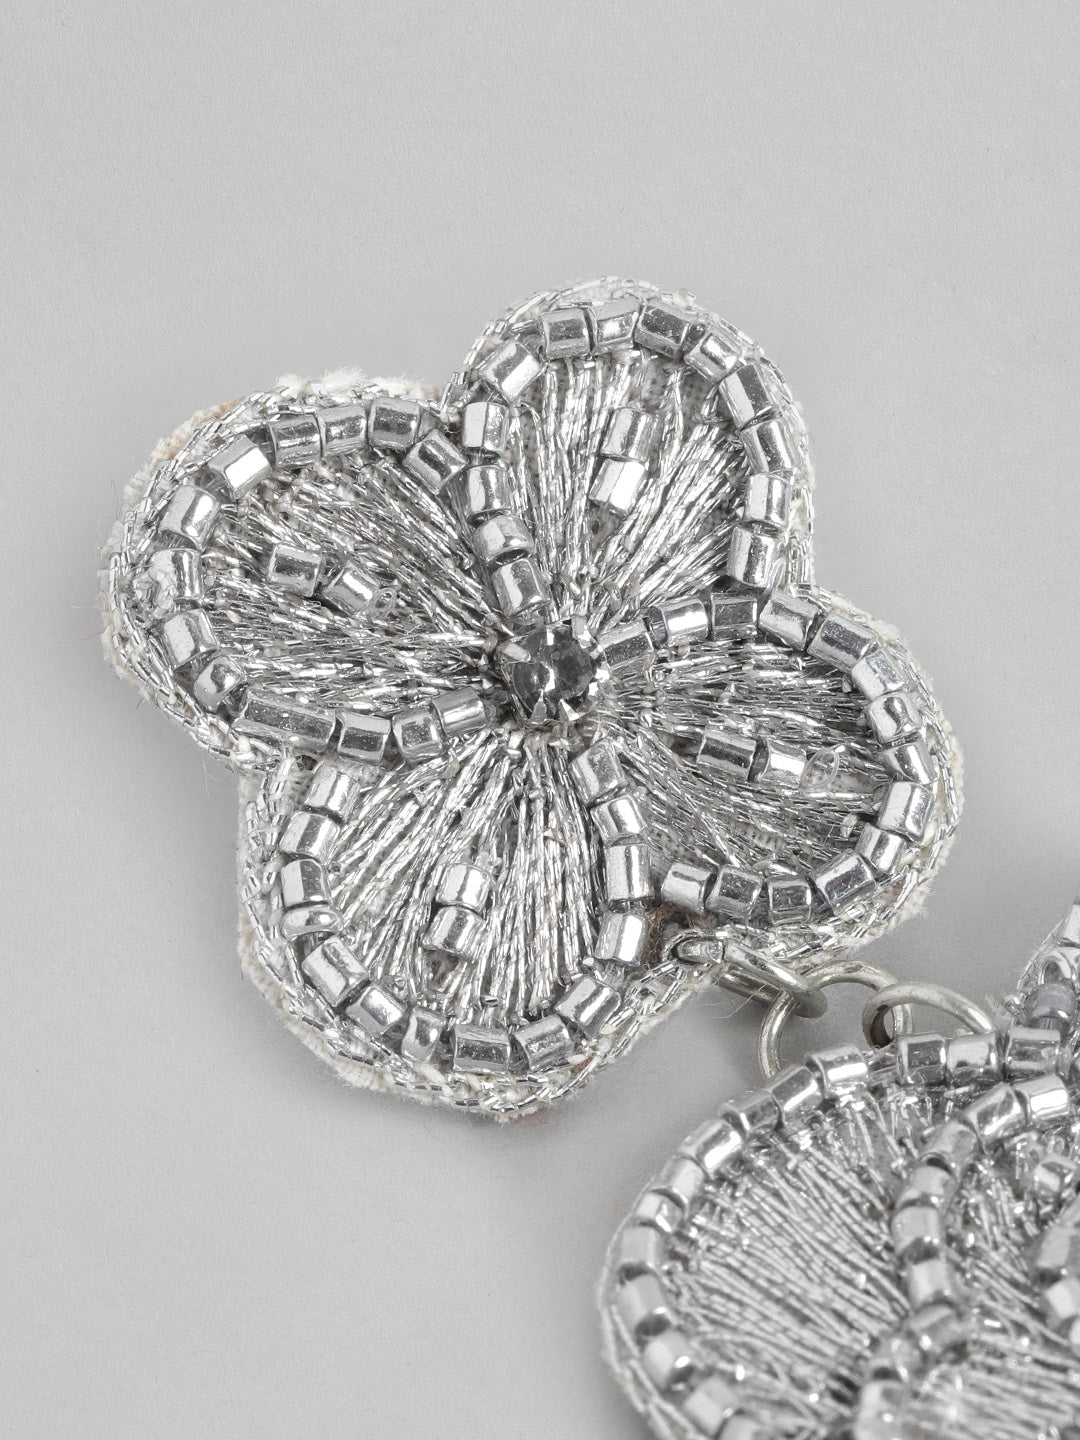 Silver-Toned Floral Drop Earrings